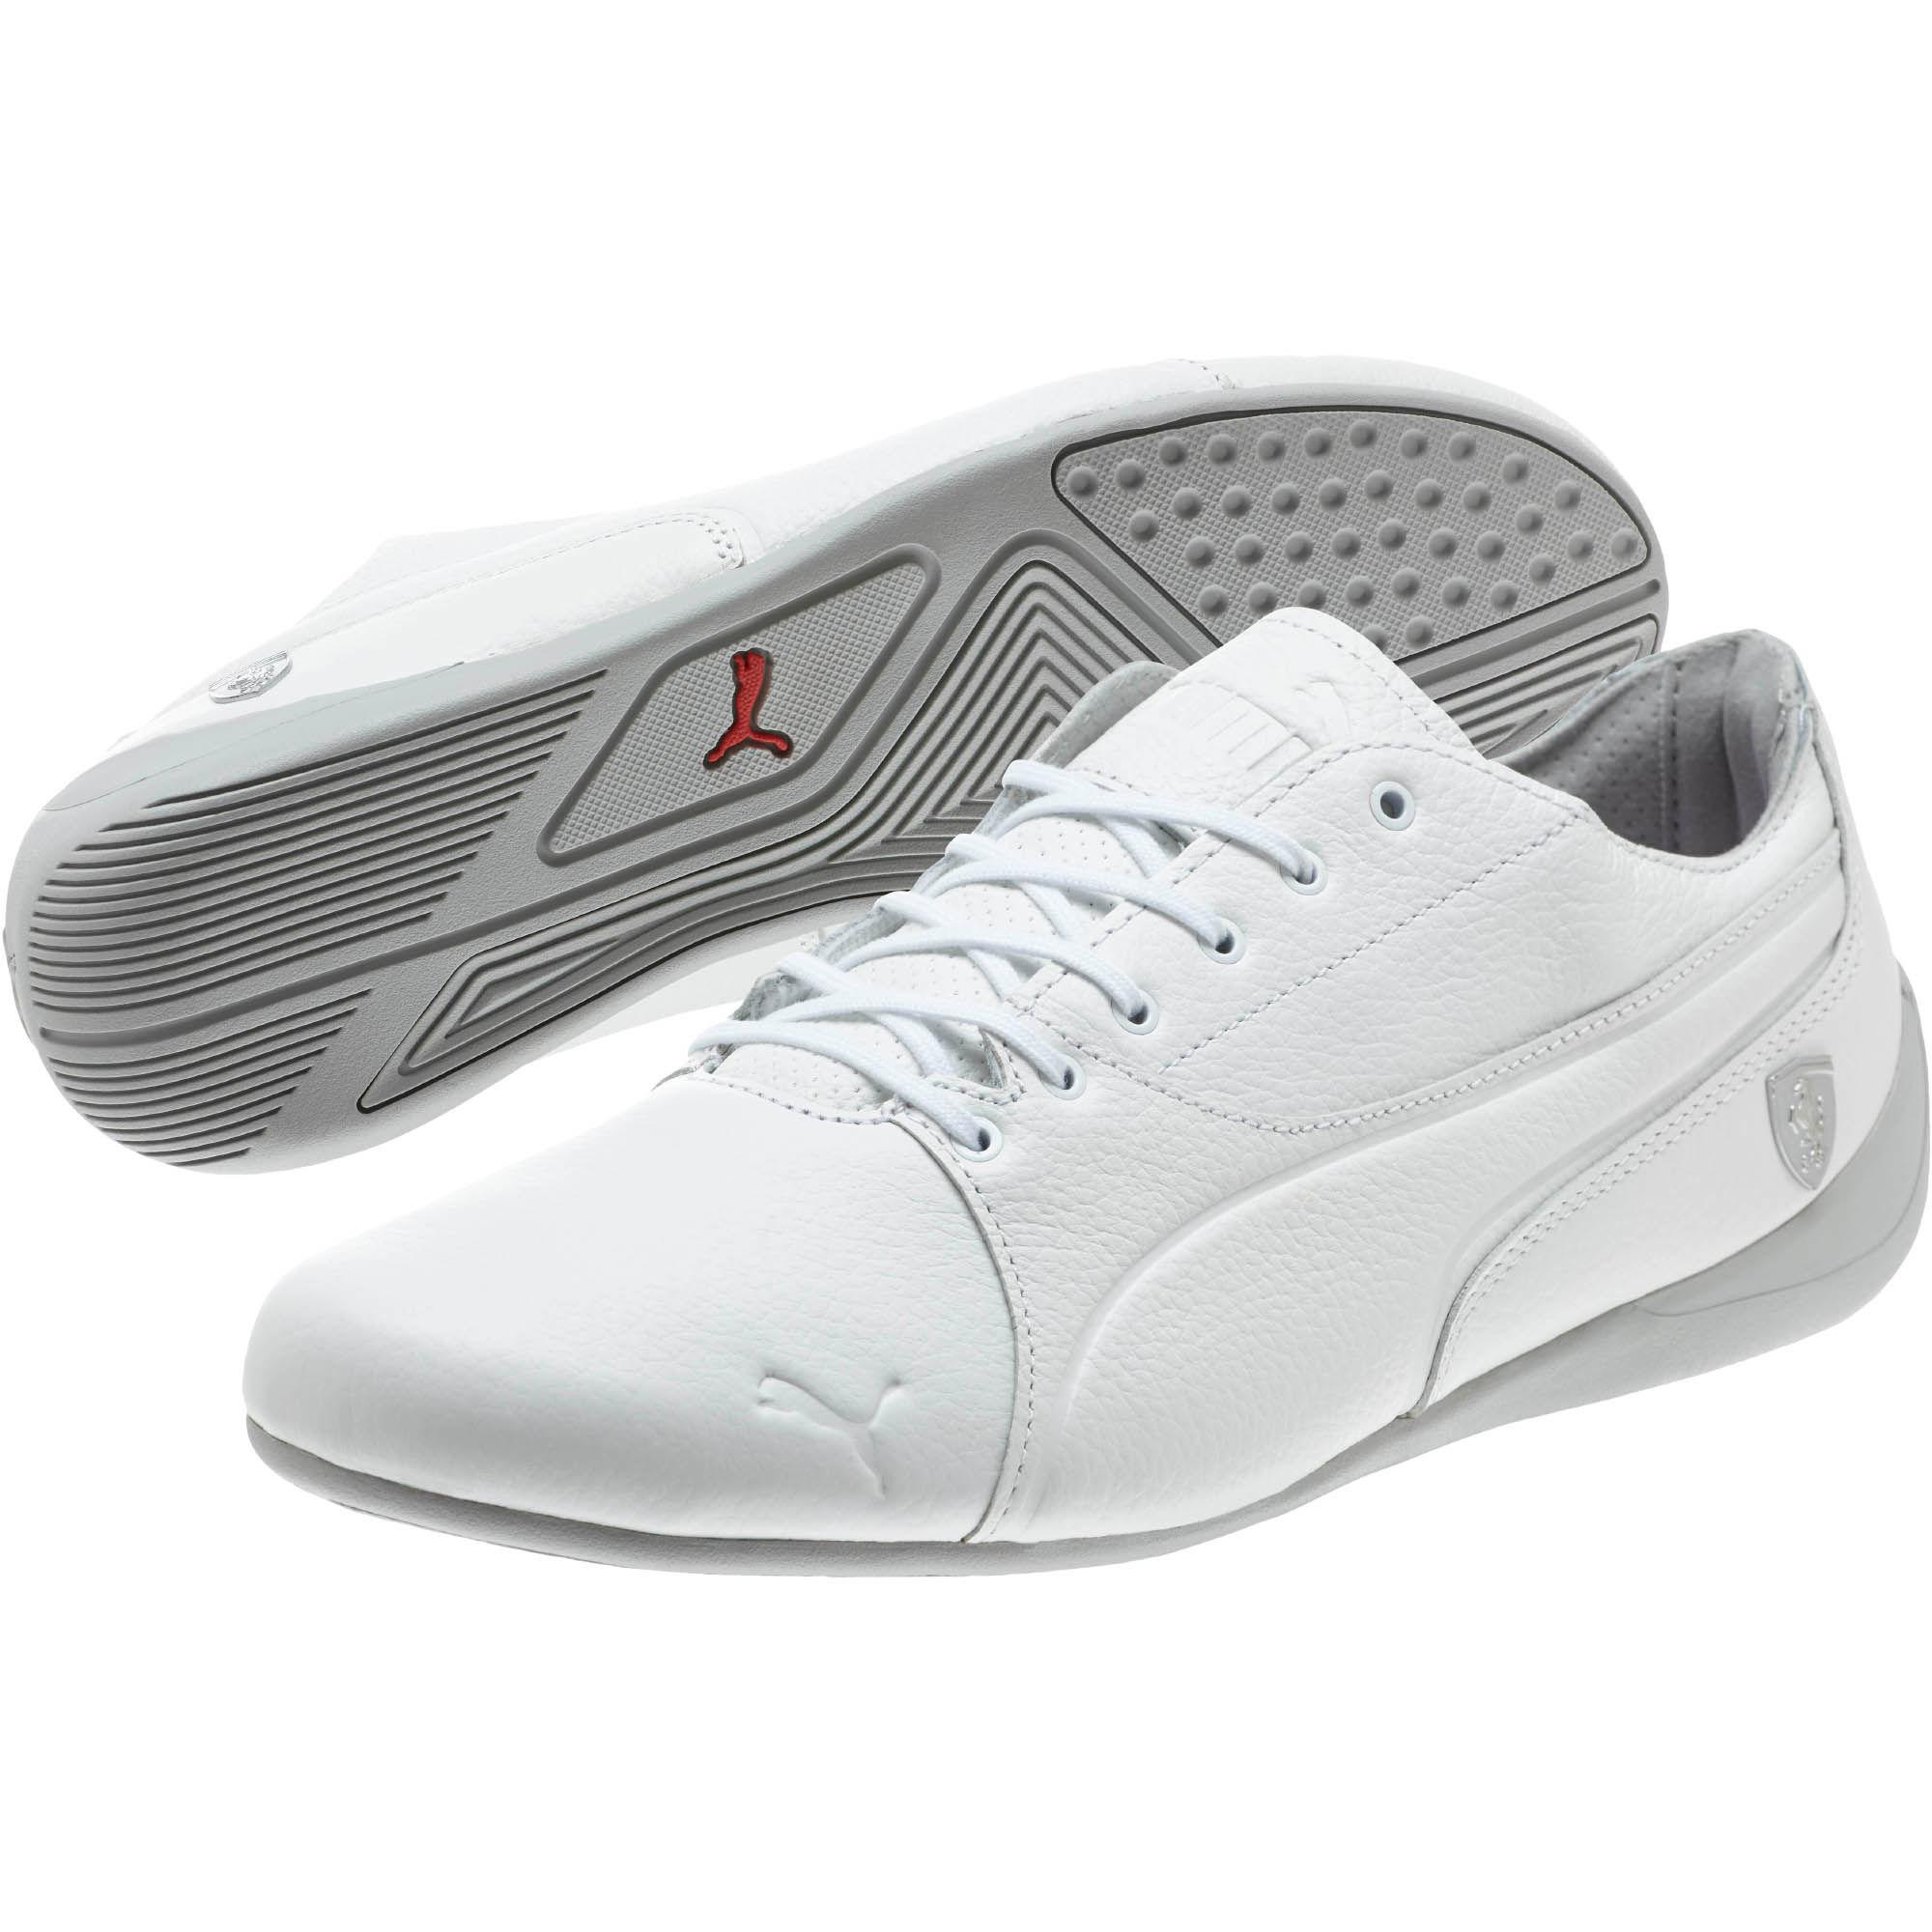 Lyst - PUMA Ferrari Drift Cat 7 Ls White Shoes in White for Men